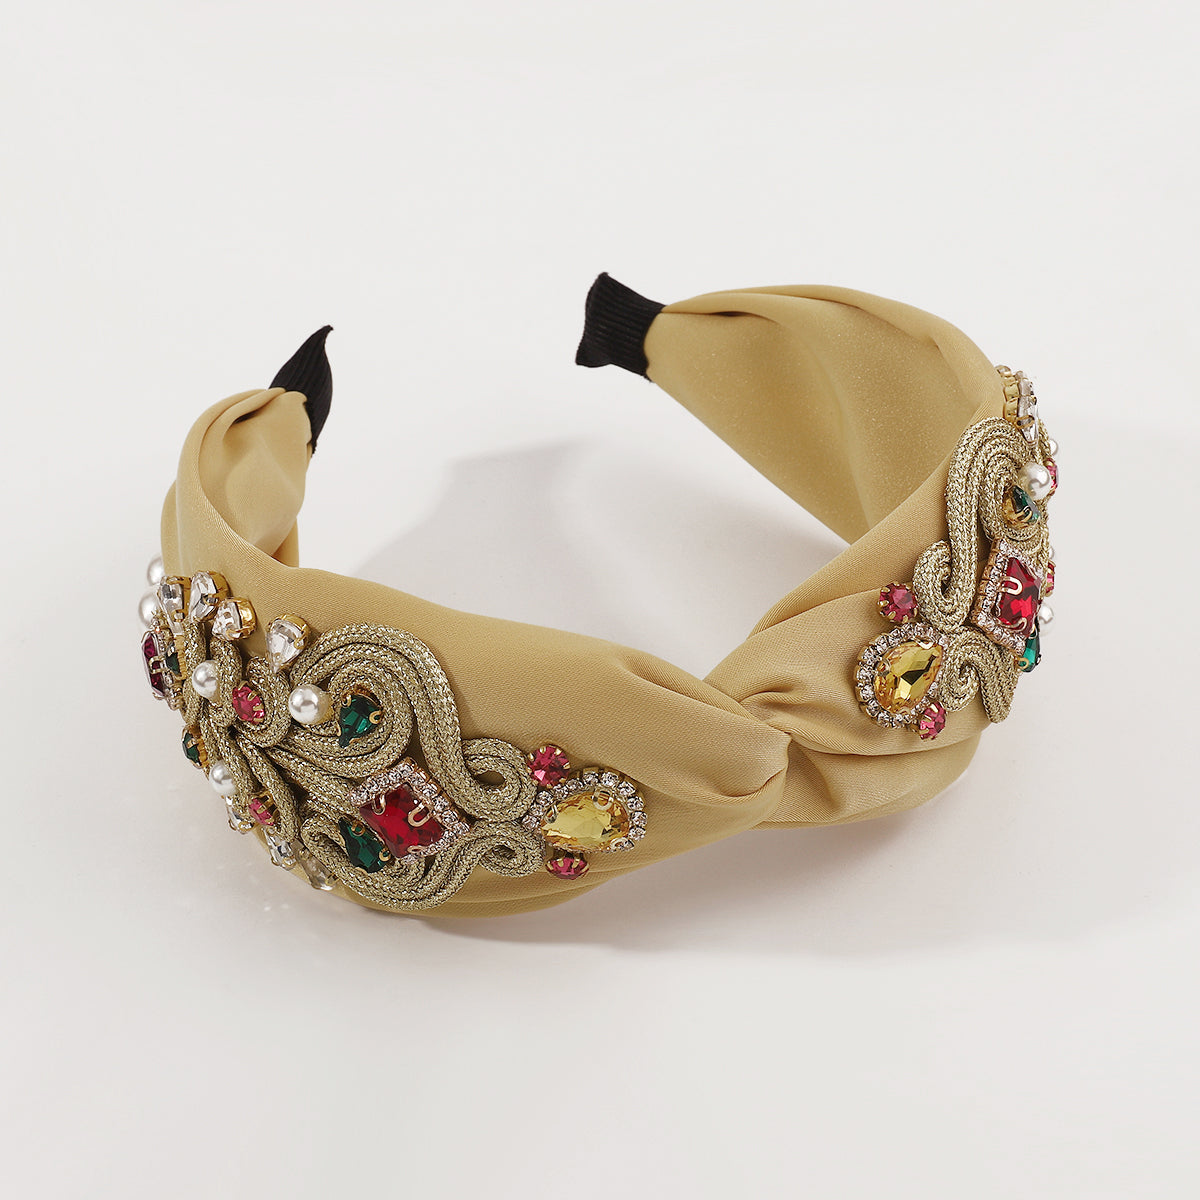 Luxury Royal Wide Rhinestones Top Knotted Headband medyjewelry